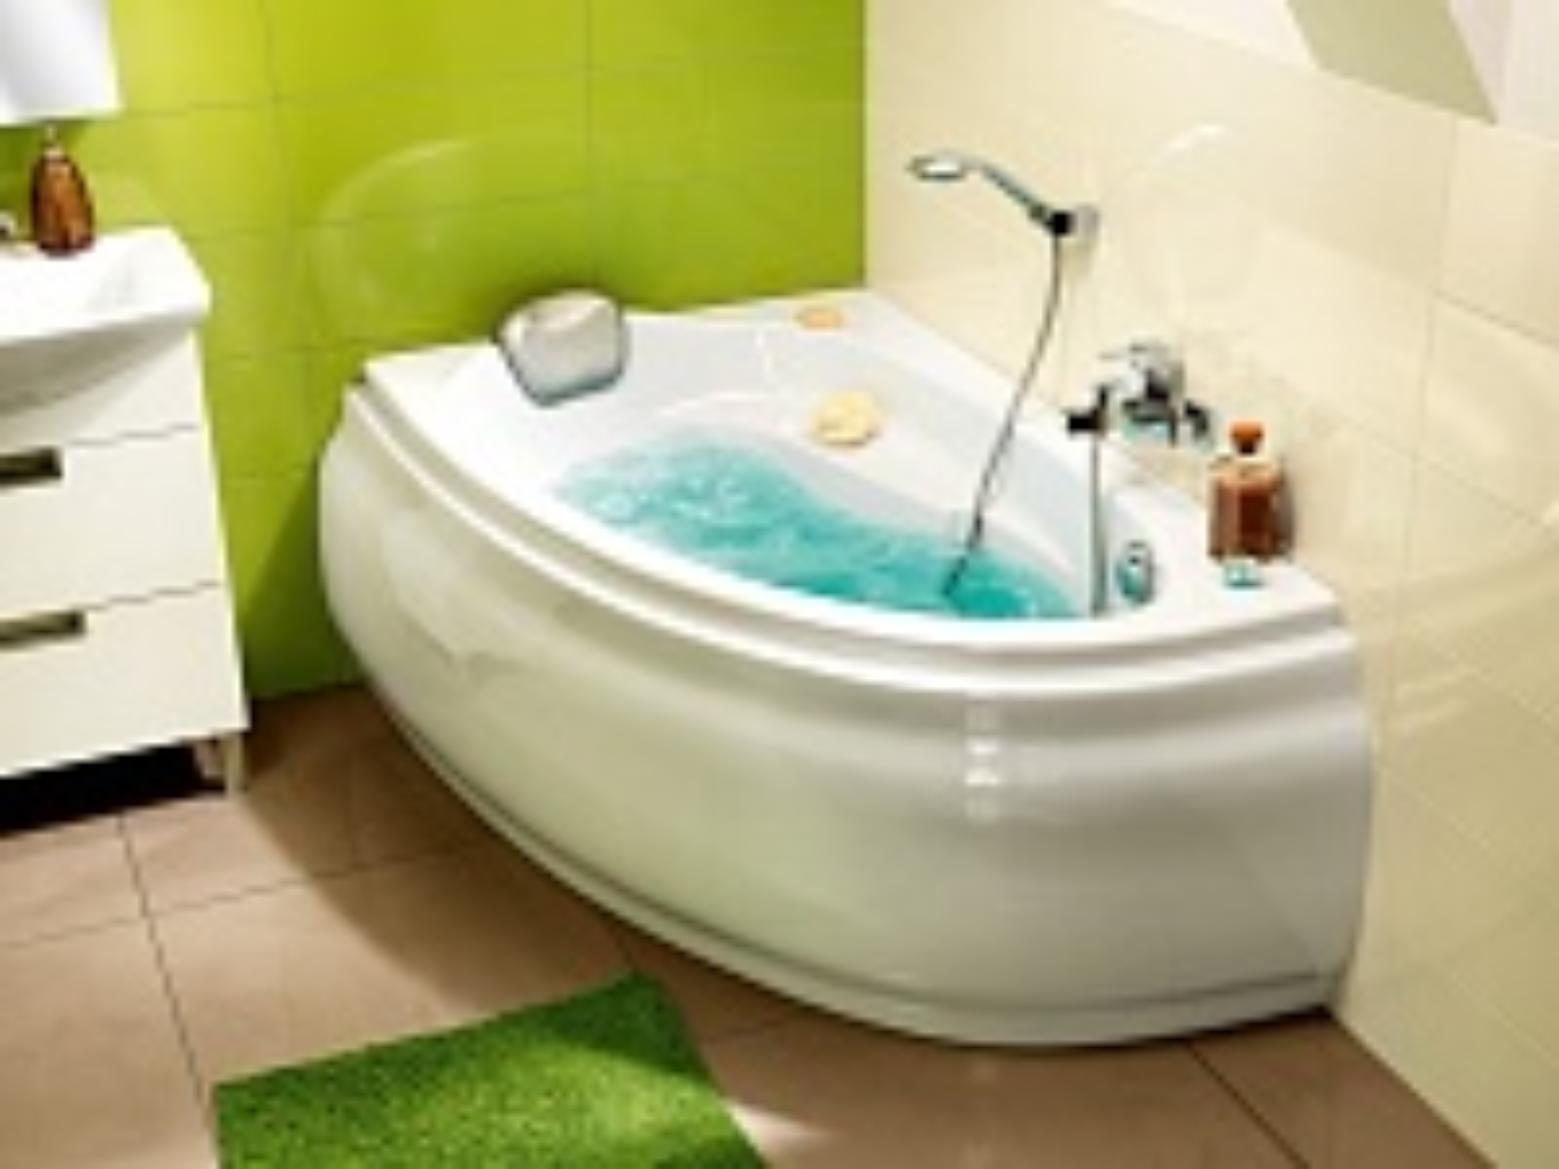 Акриловая ванна Cersanit Joanna 160x95 см L